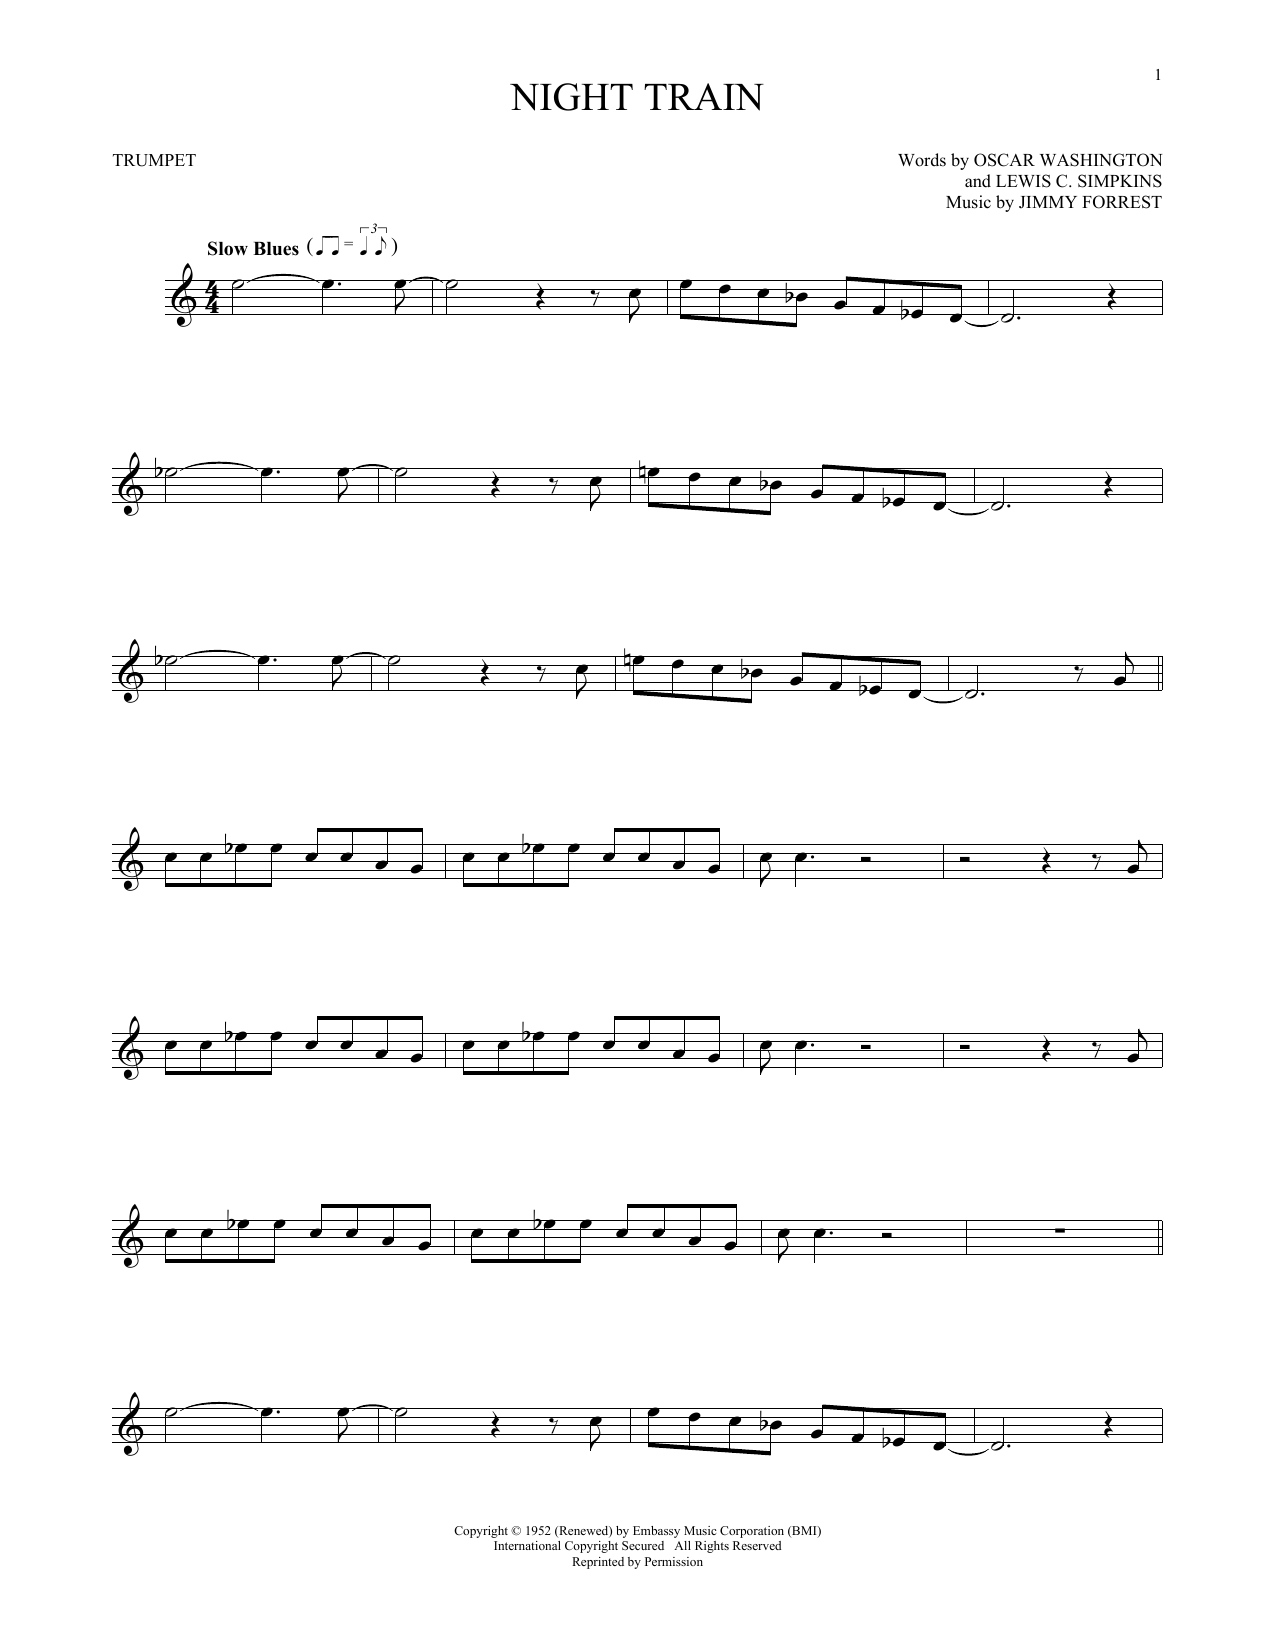 Oscar Washington Night Train Sheet Music Notes & Chords for Flute - Download or Print PDF